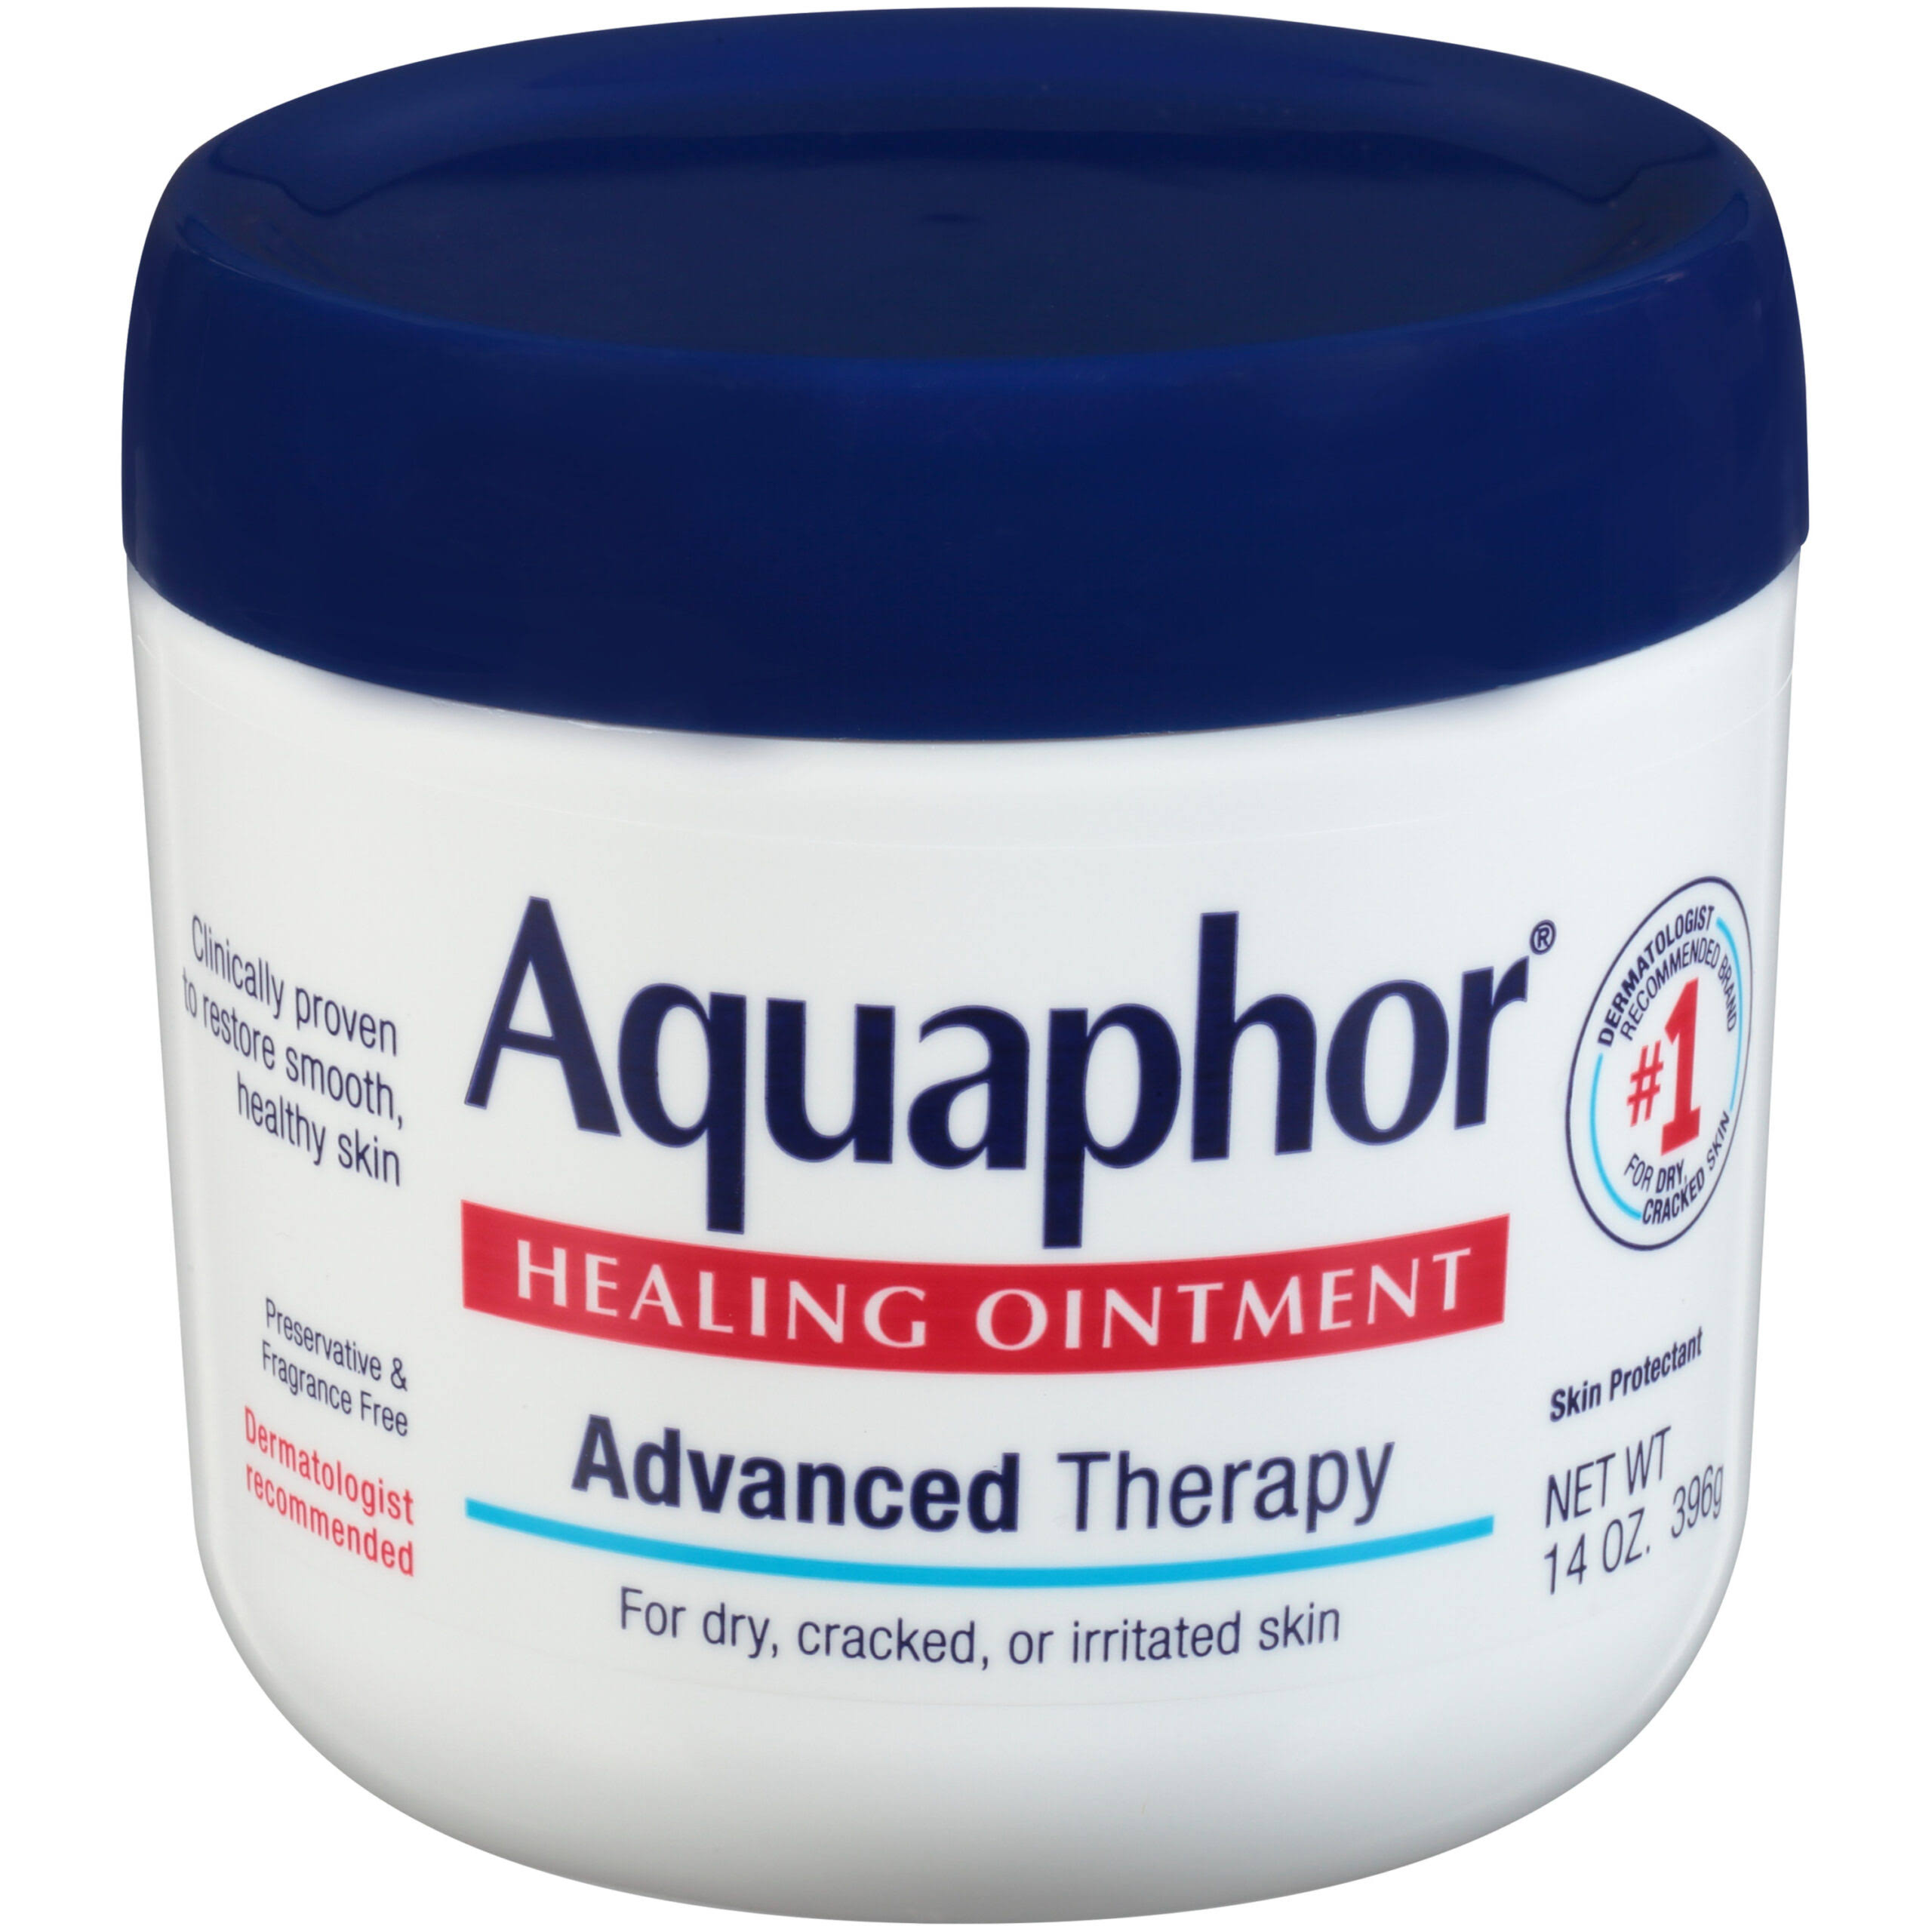 Eucerin Aquaphor Healing Ointment - 14oz